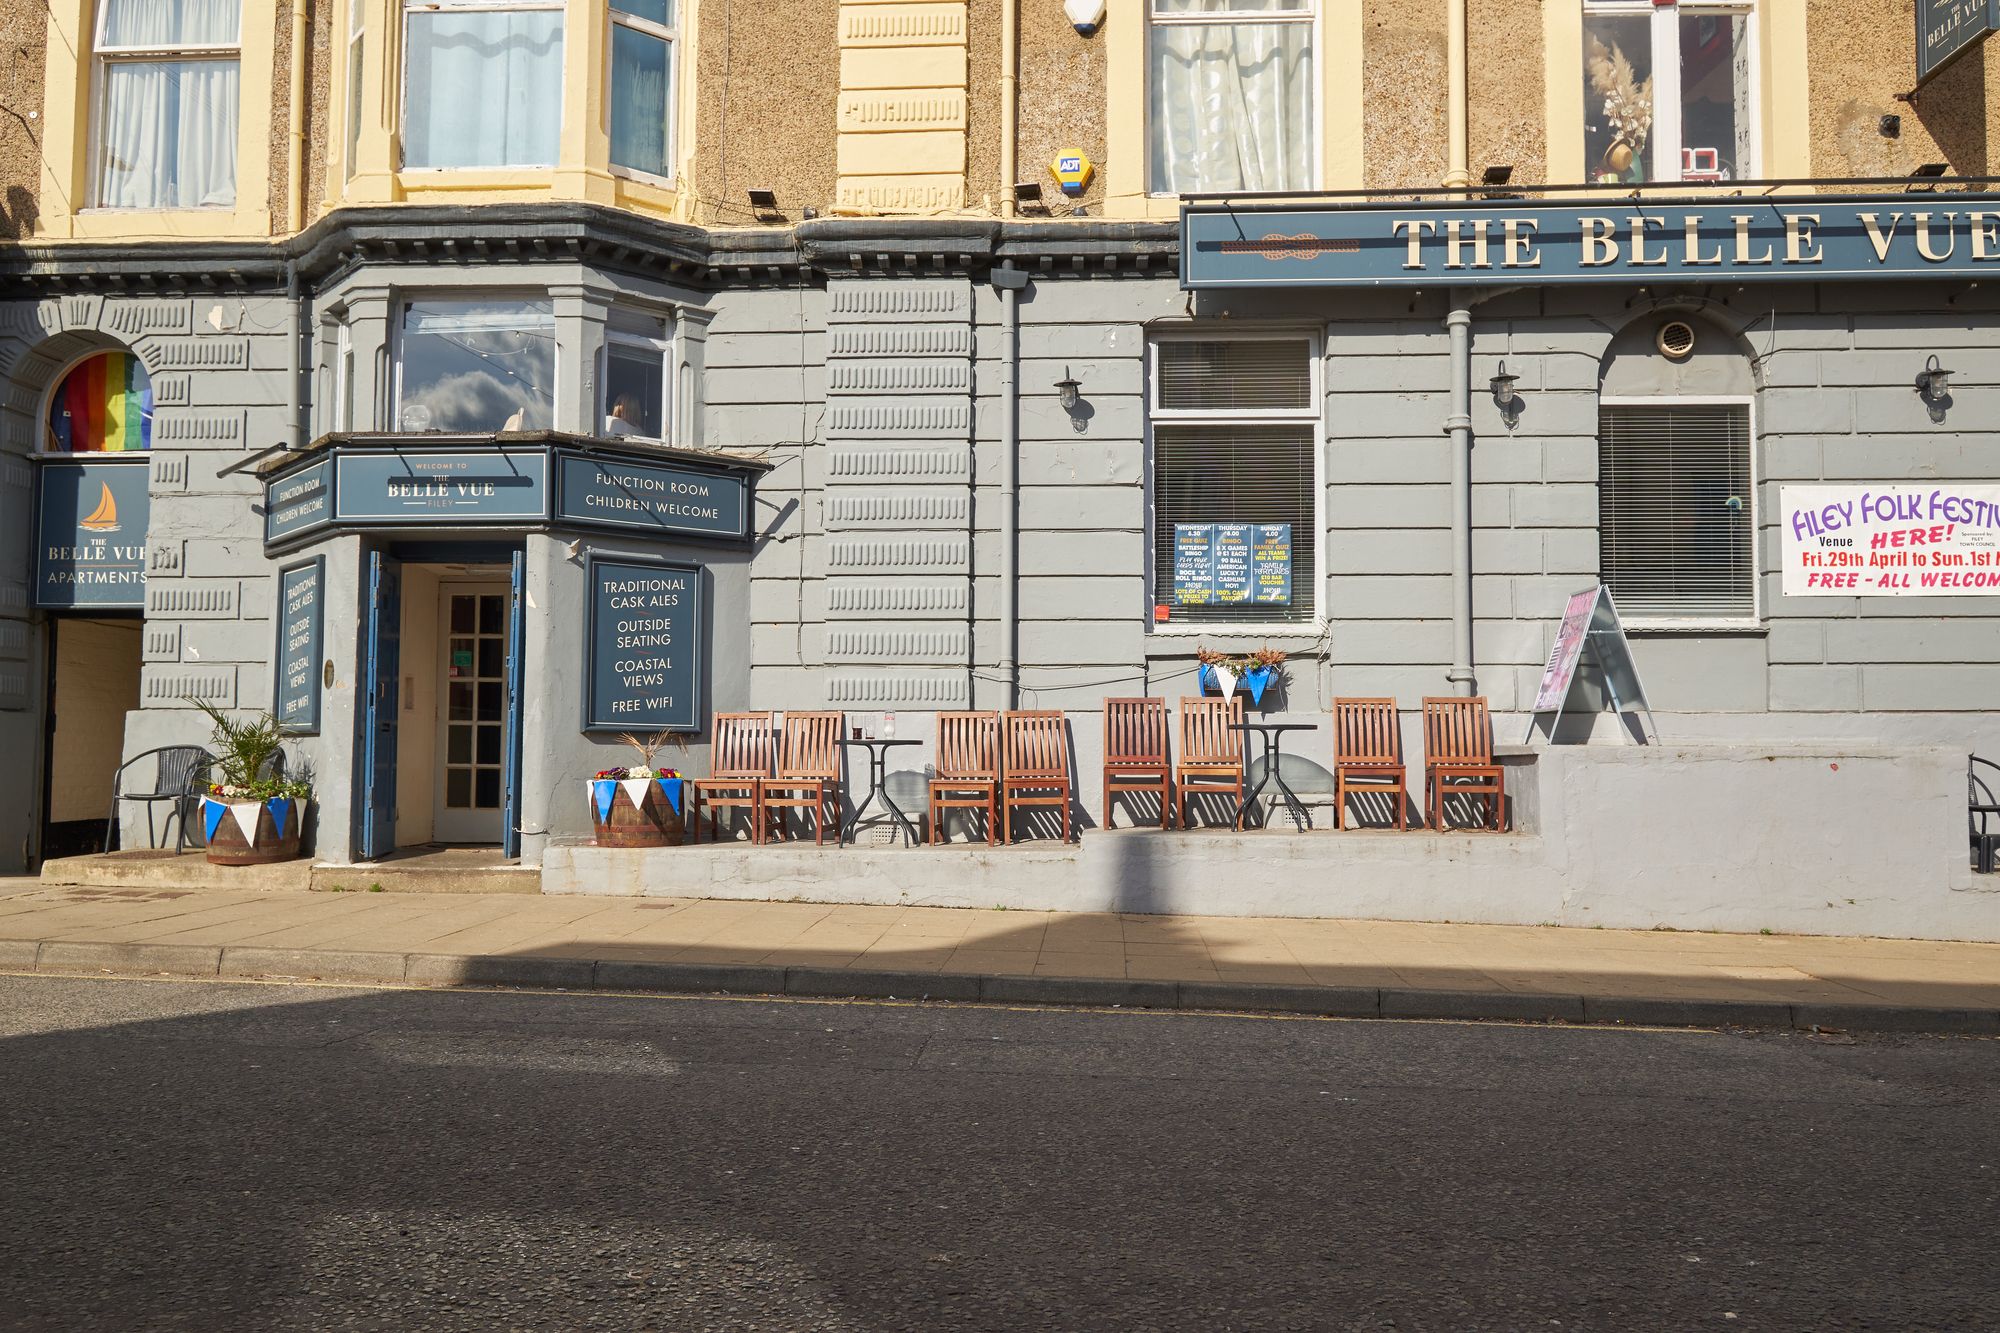 The Belle Vue pub in Filey centre